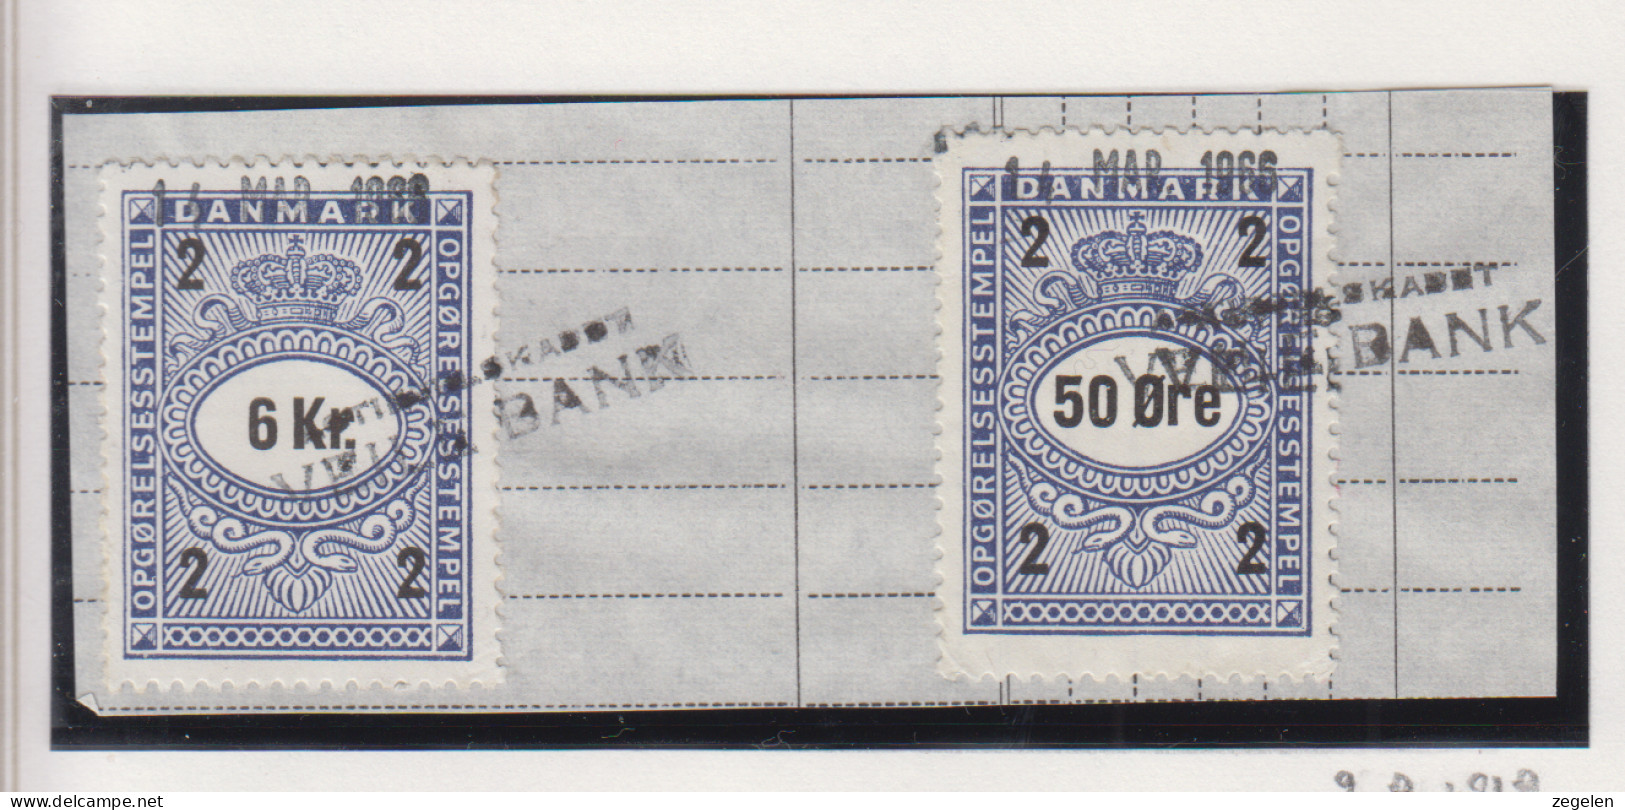 Denemarken Fiskale Zegel Cat. J.Barefoot Opgorelses(Debit Note) 209+219 Op Fragment - Revenue Stamps